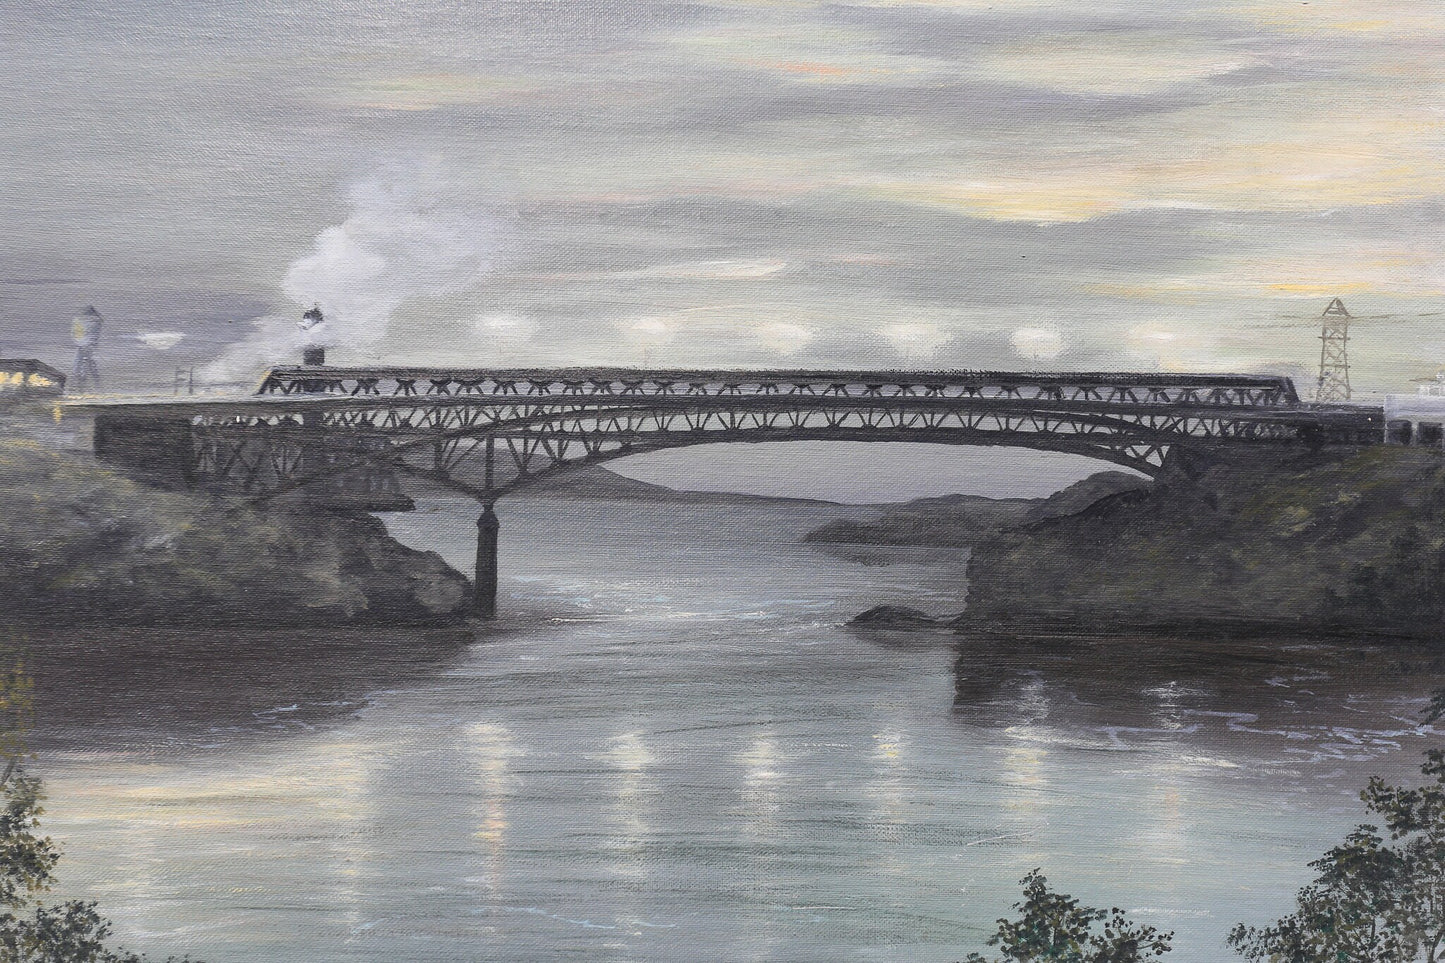 Oil Painting Reversing Falls Bridge St. John New Brunswick Canada Foggy Artist Signed Nardini 1950s on Canvas board